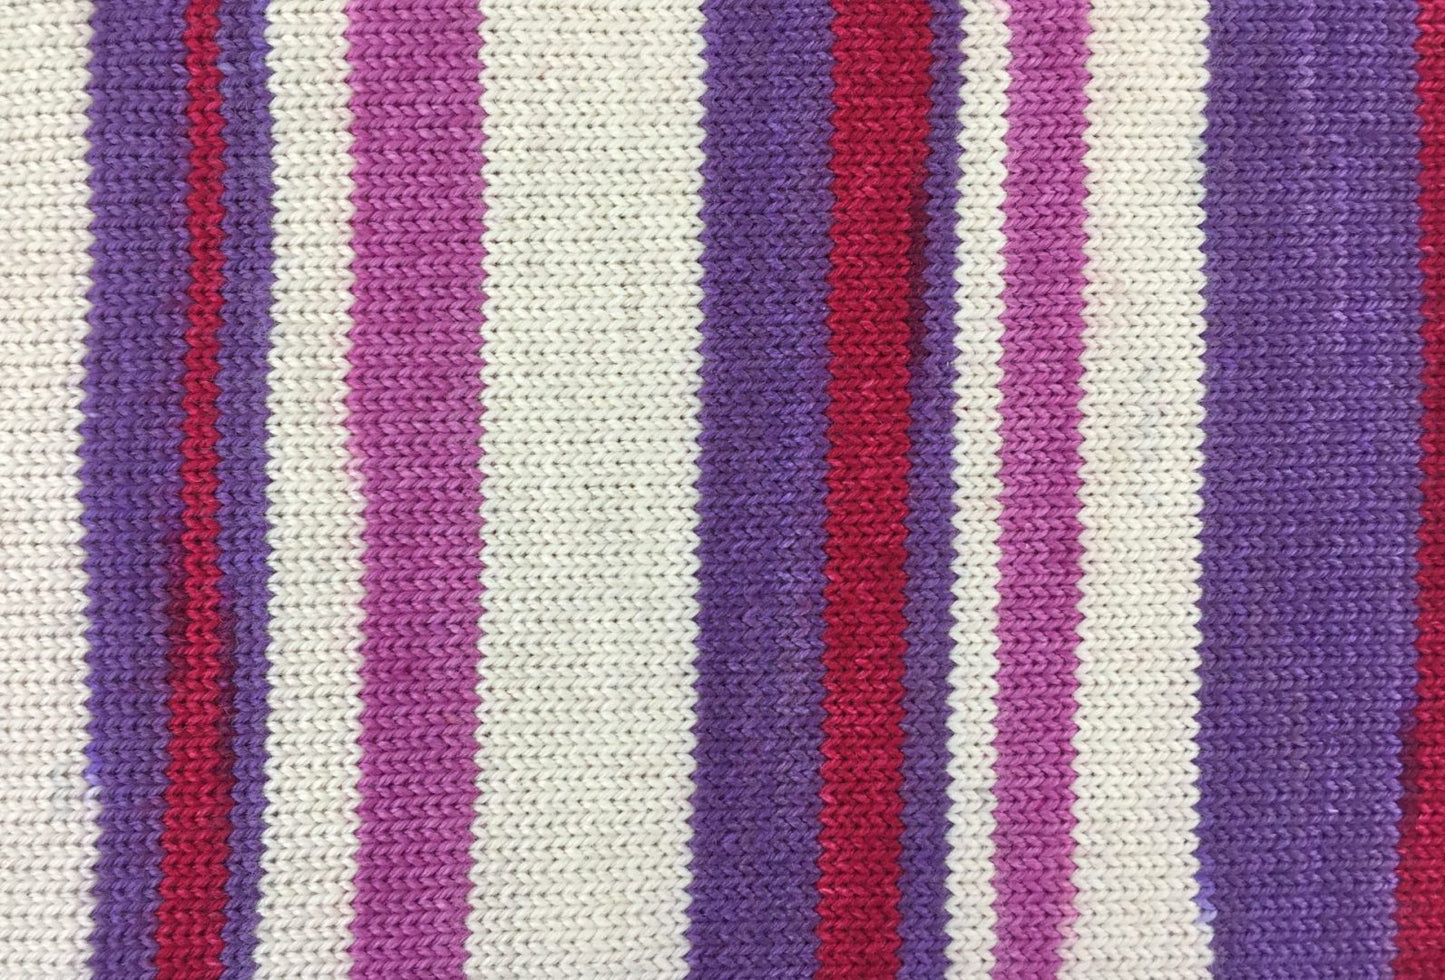 Tangled love self-striping sock yarn